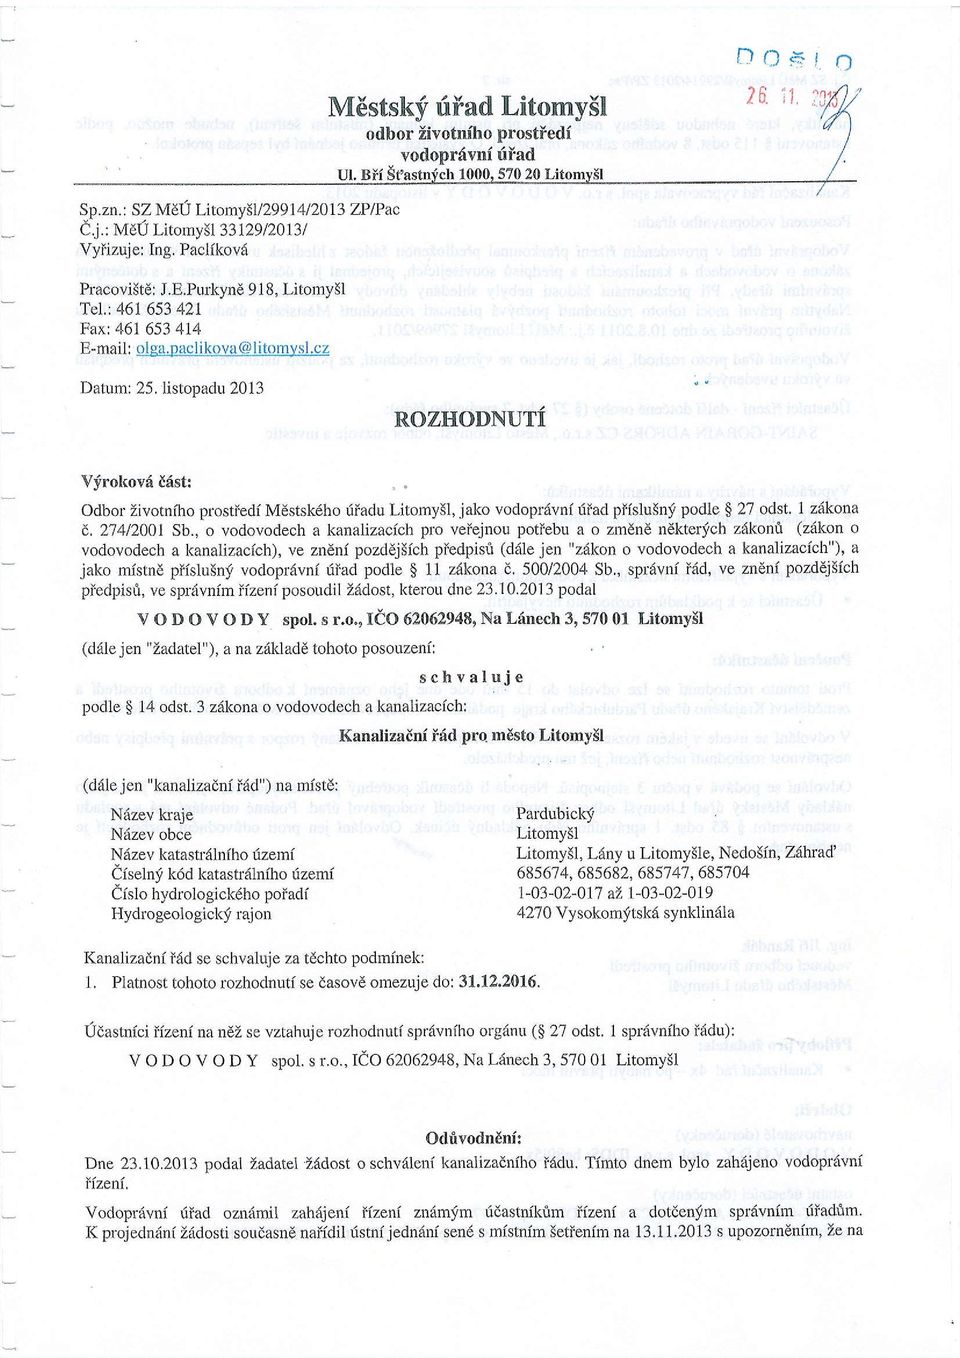 listopadu 2013 ROZHODNUTI Vfrokovf i6st: Odbor Zivotniho prosri'edi M6stsk6ho riiadu Litornysl, jako vodopr6vni riiad piislu3n! podle $ 27 odst. 1 zdkona d, 27412001 Sb.